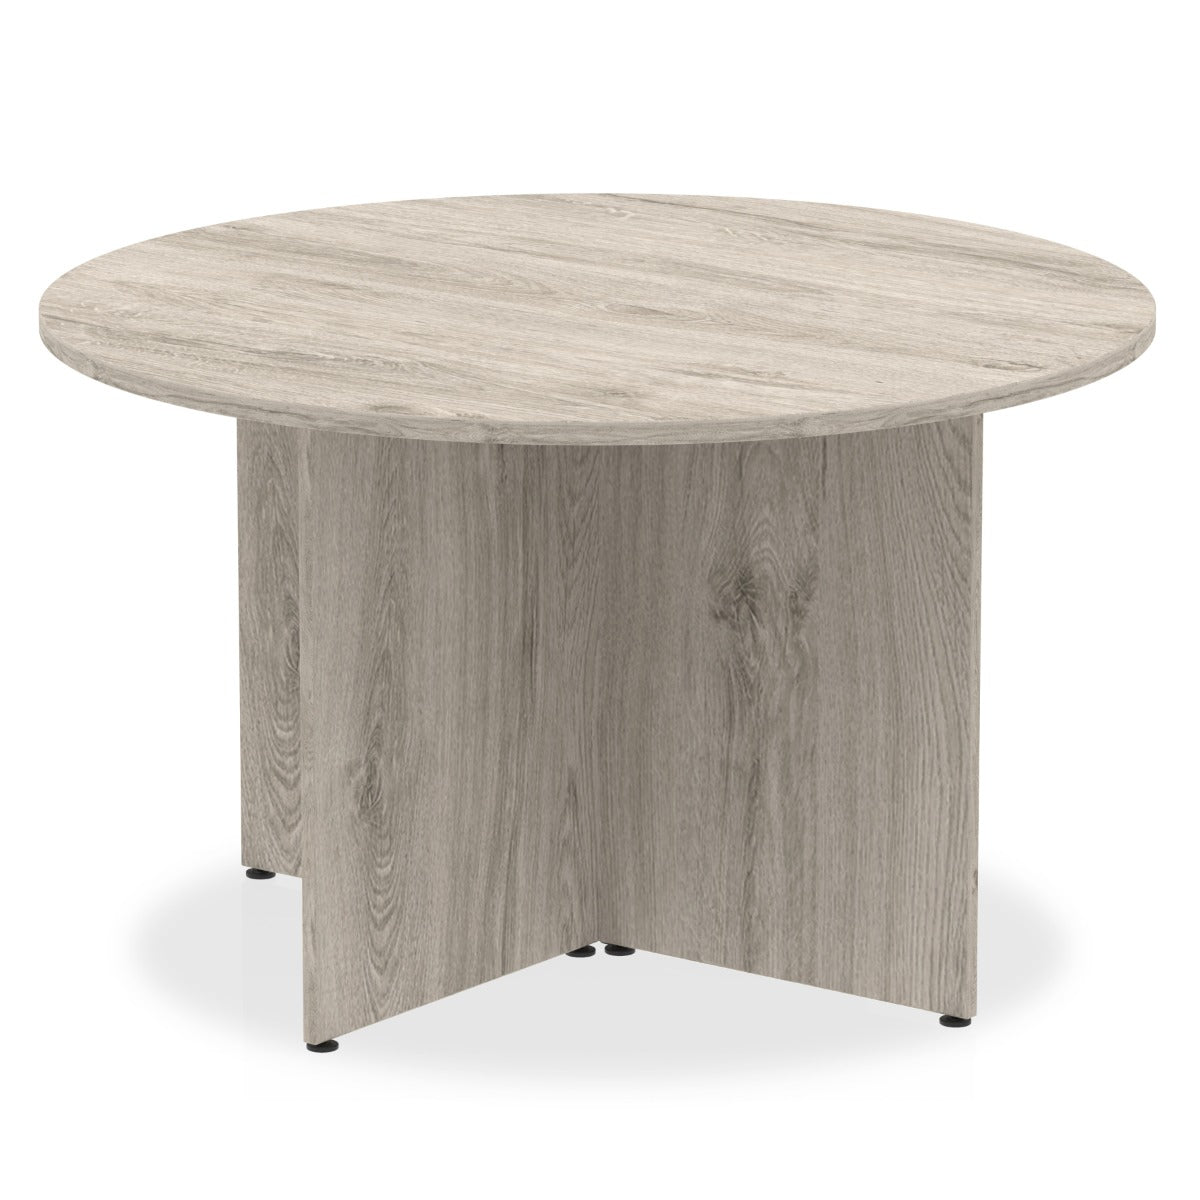 Impulse 1200mm Grey Oak Round Arrowhead Leg Meeting Table